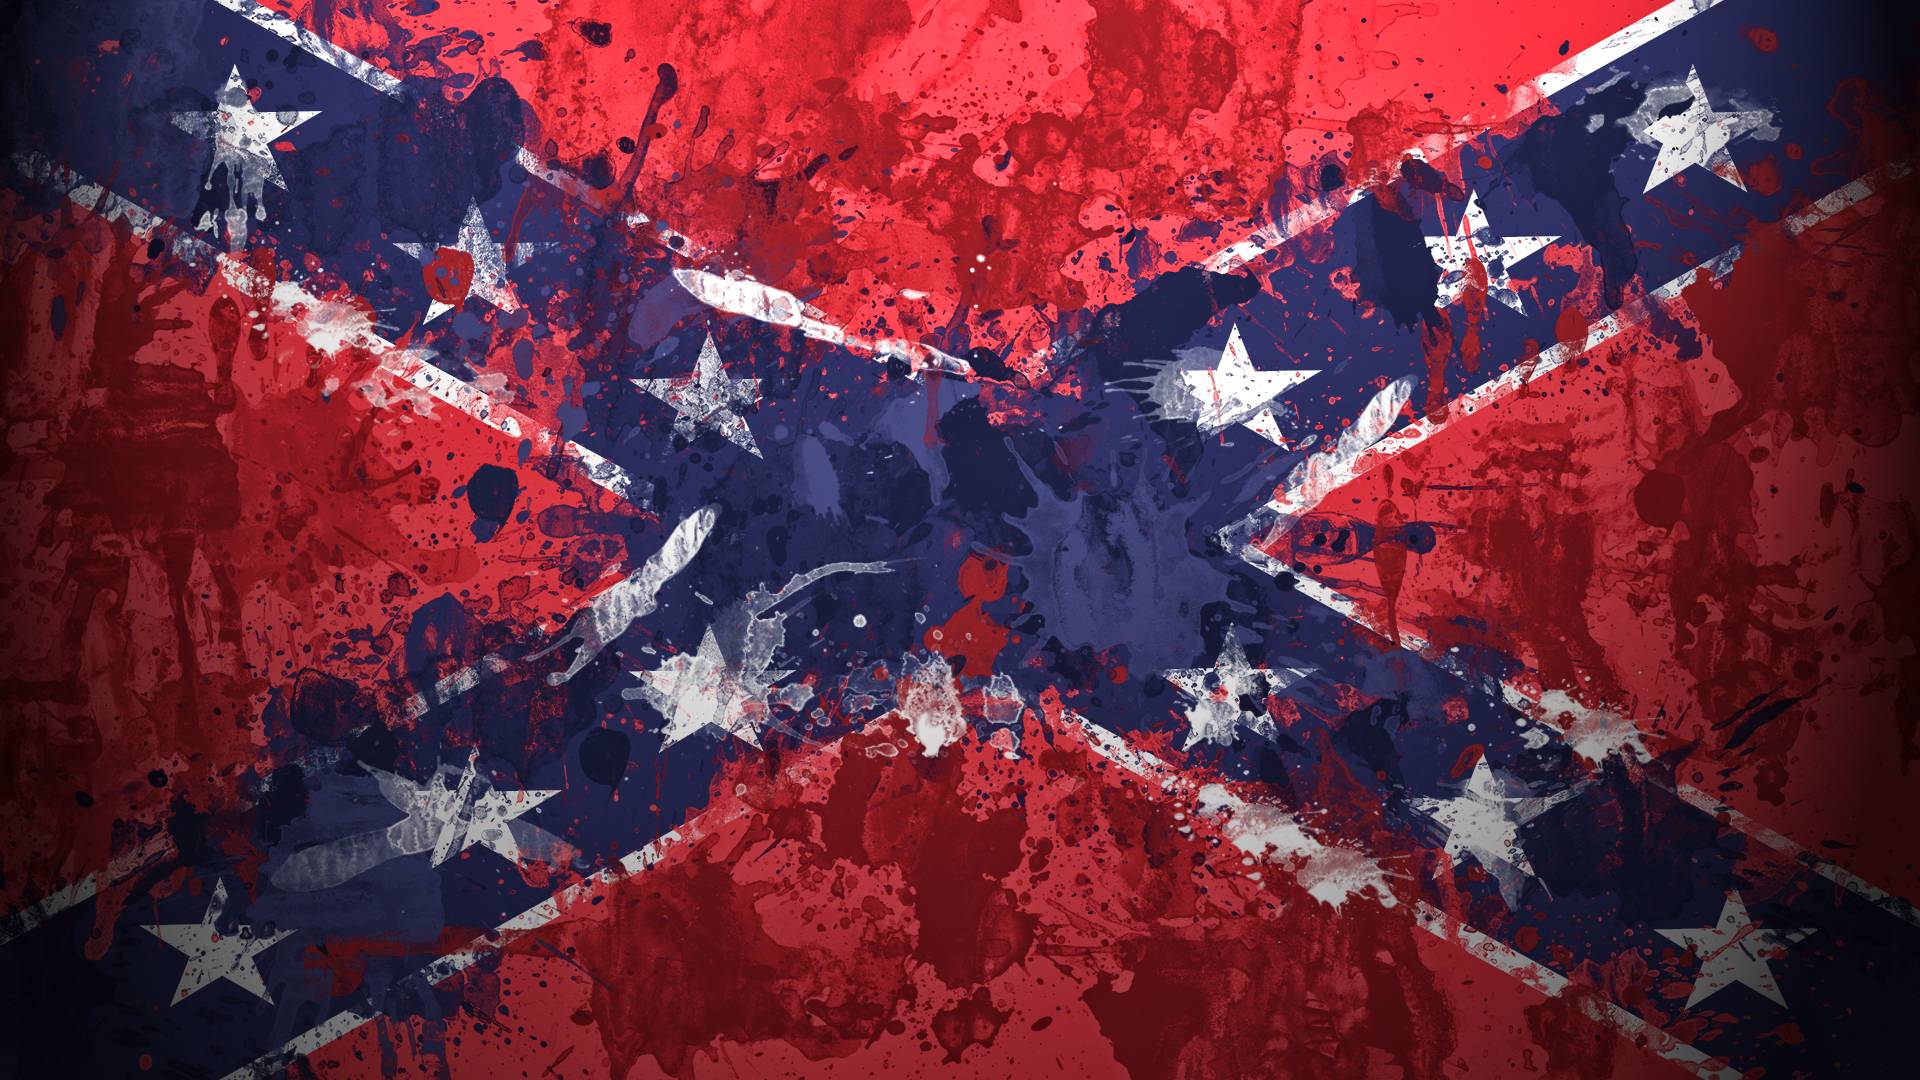 Confederate flag background